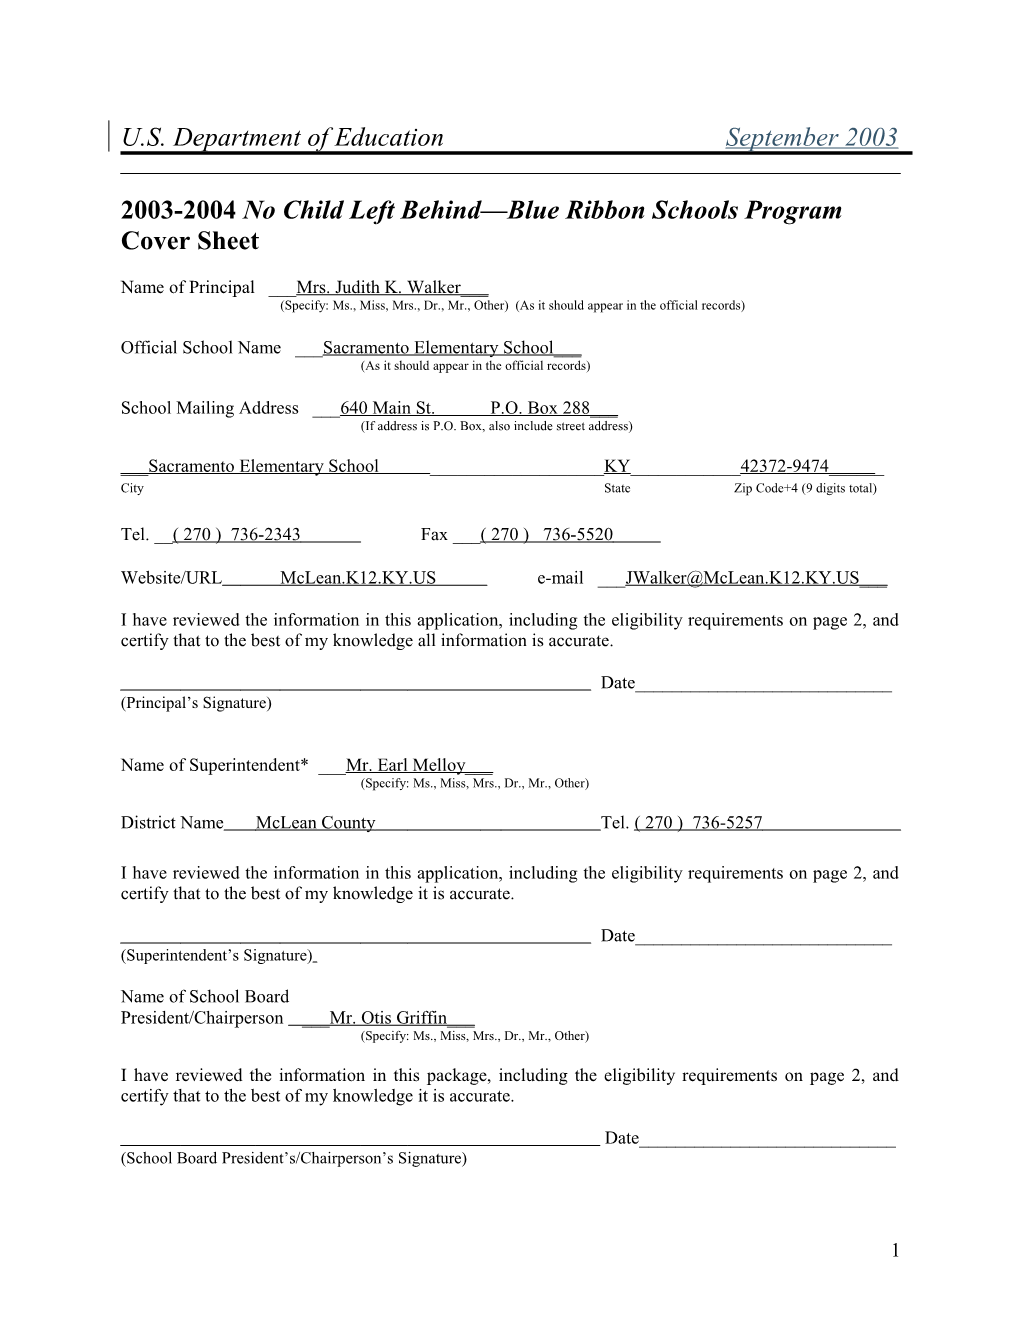 Sacramento Elementary School 2004 No Child Left Behind-Blue Ribbon School Application (Msword)